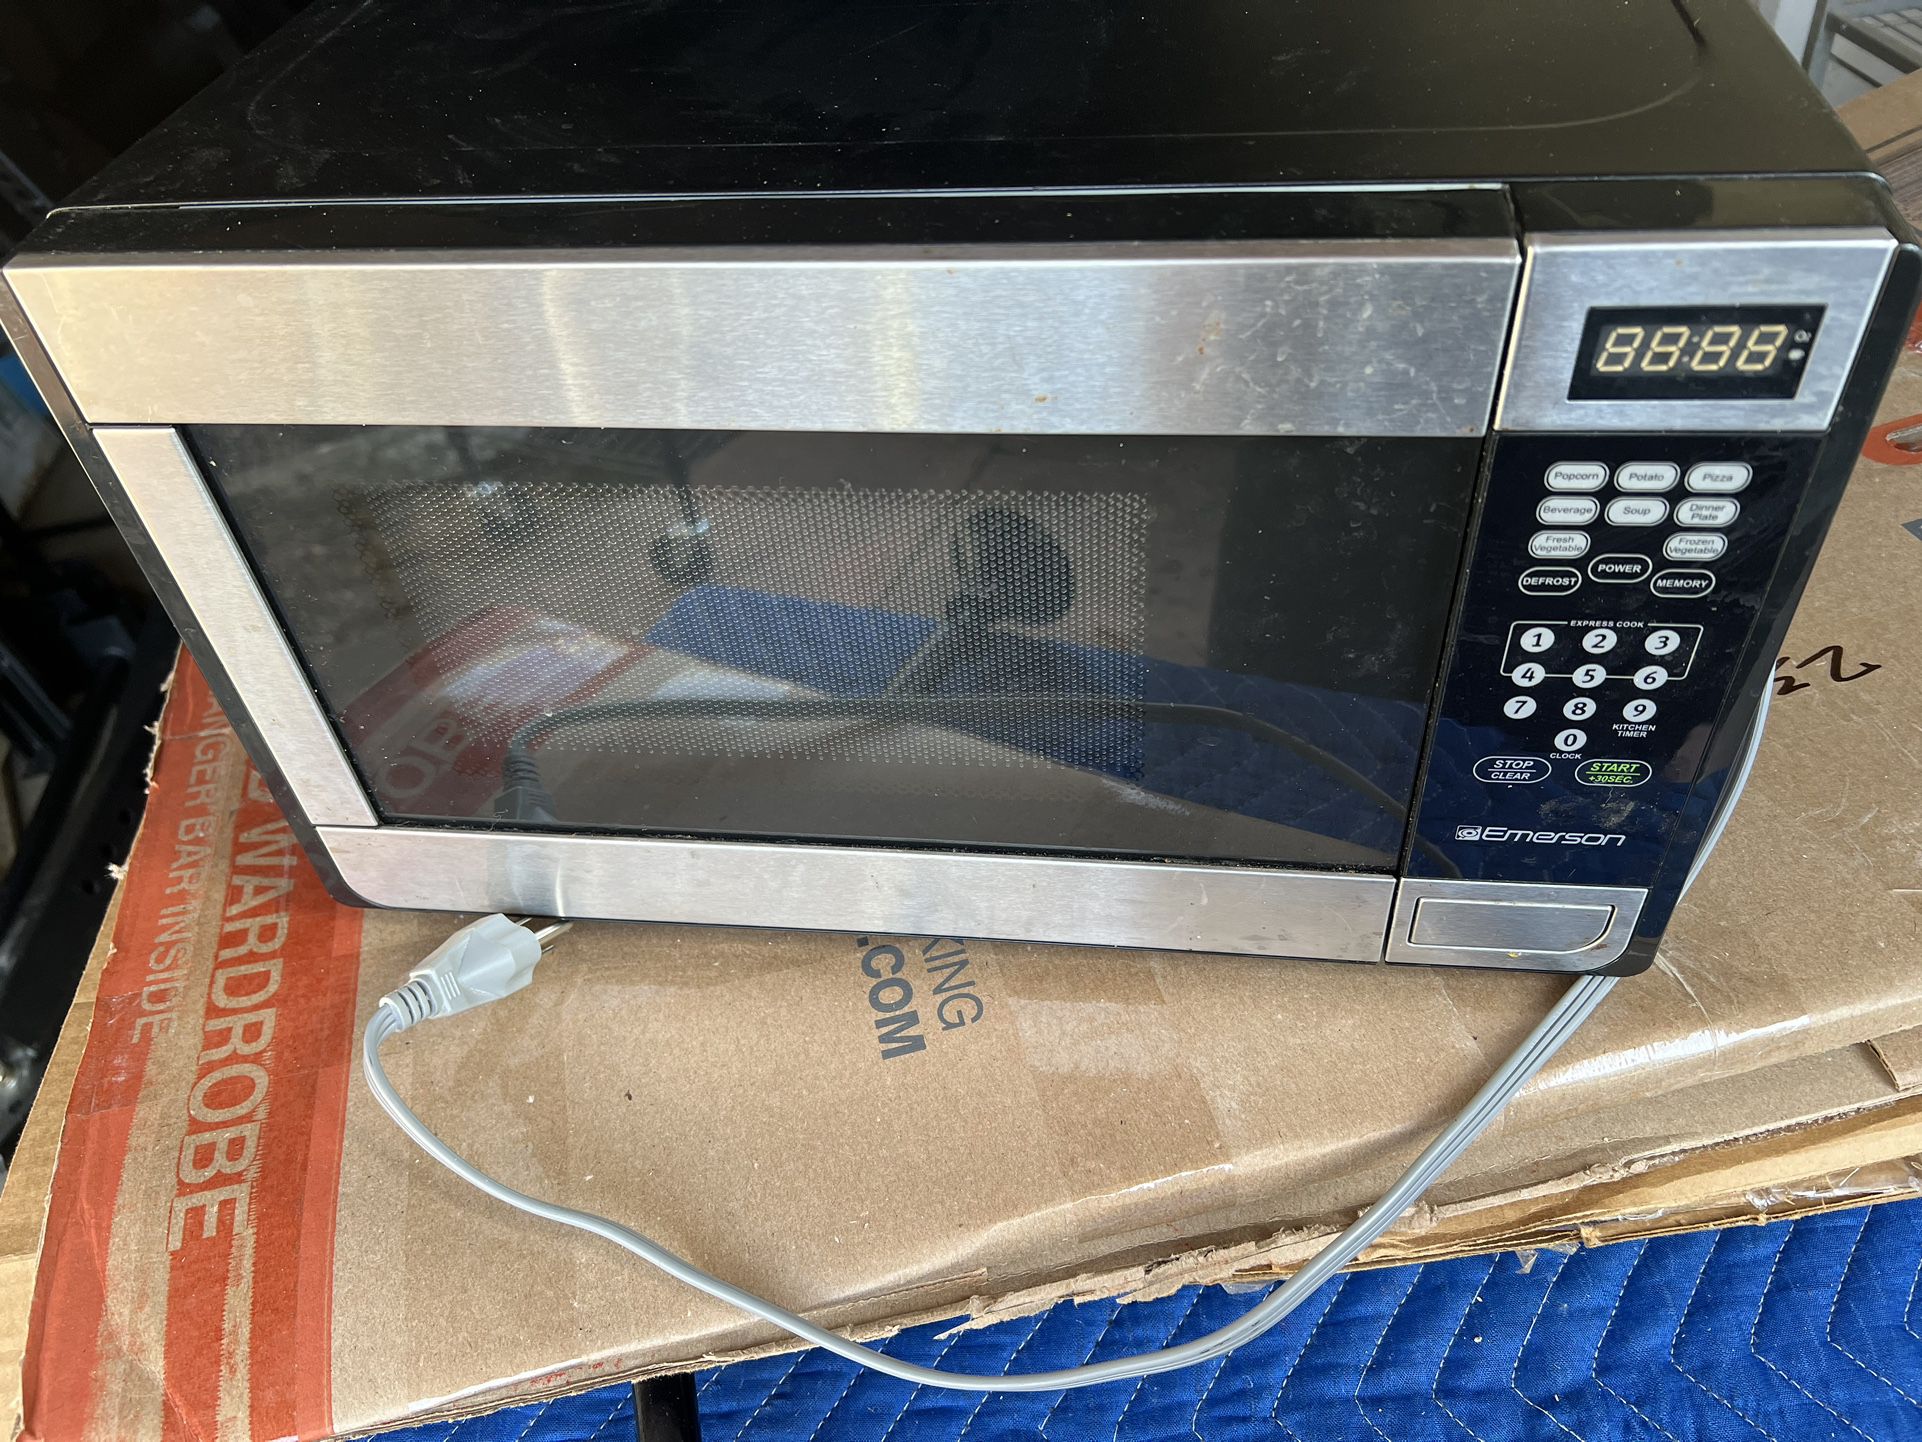 Small Microwave (700W)